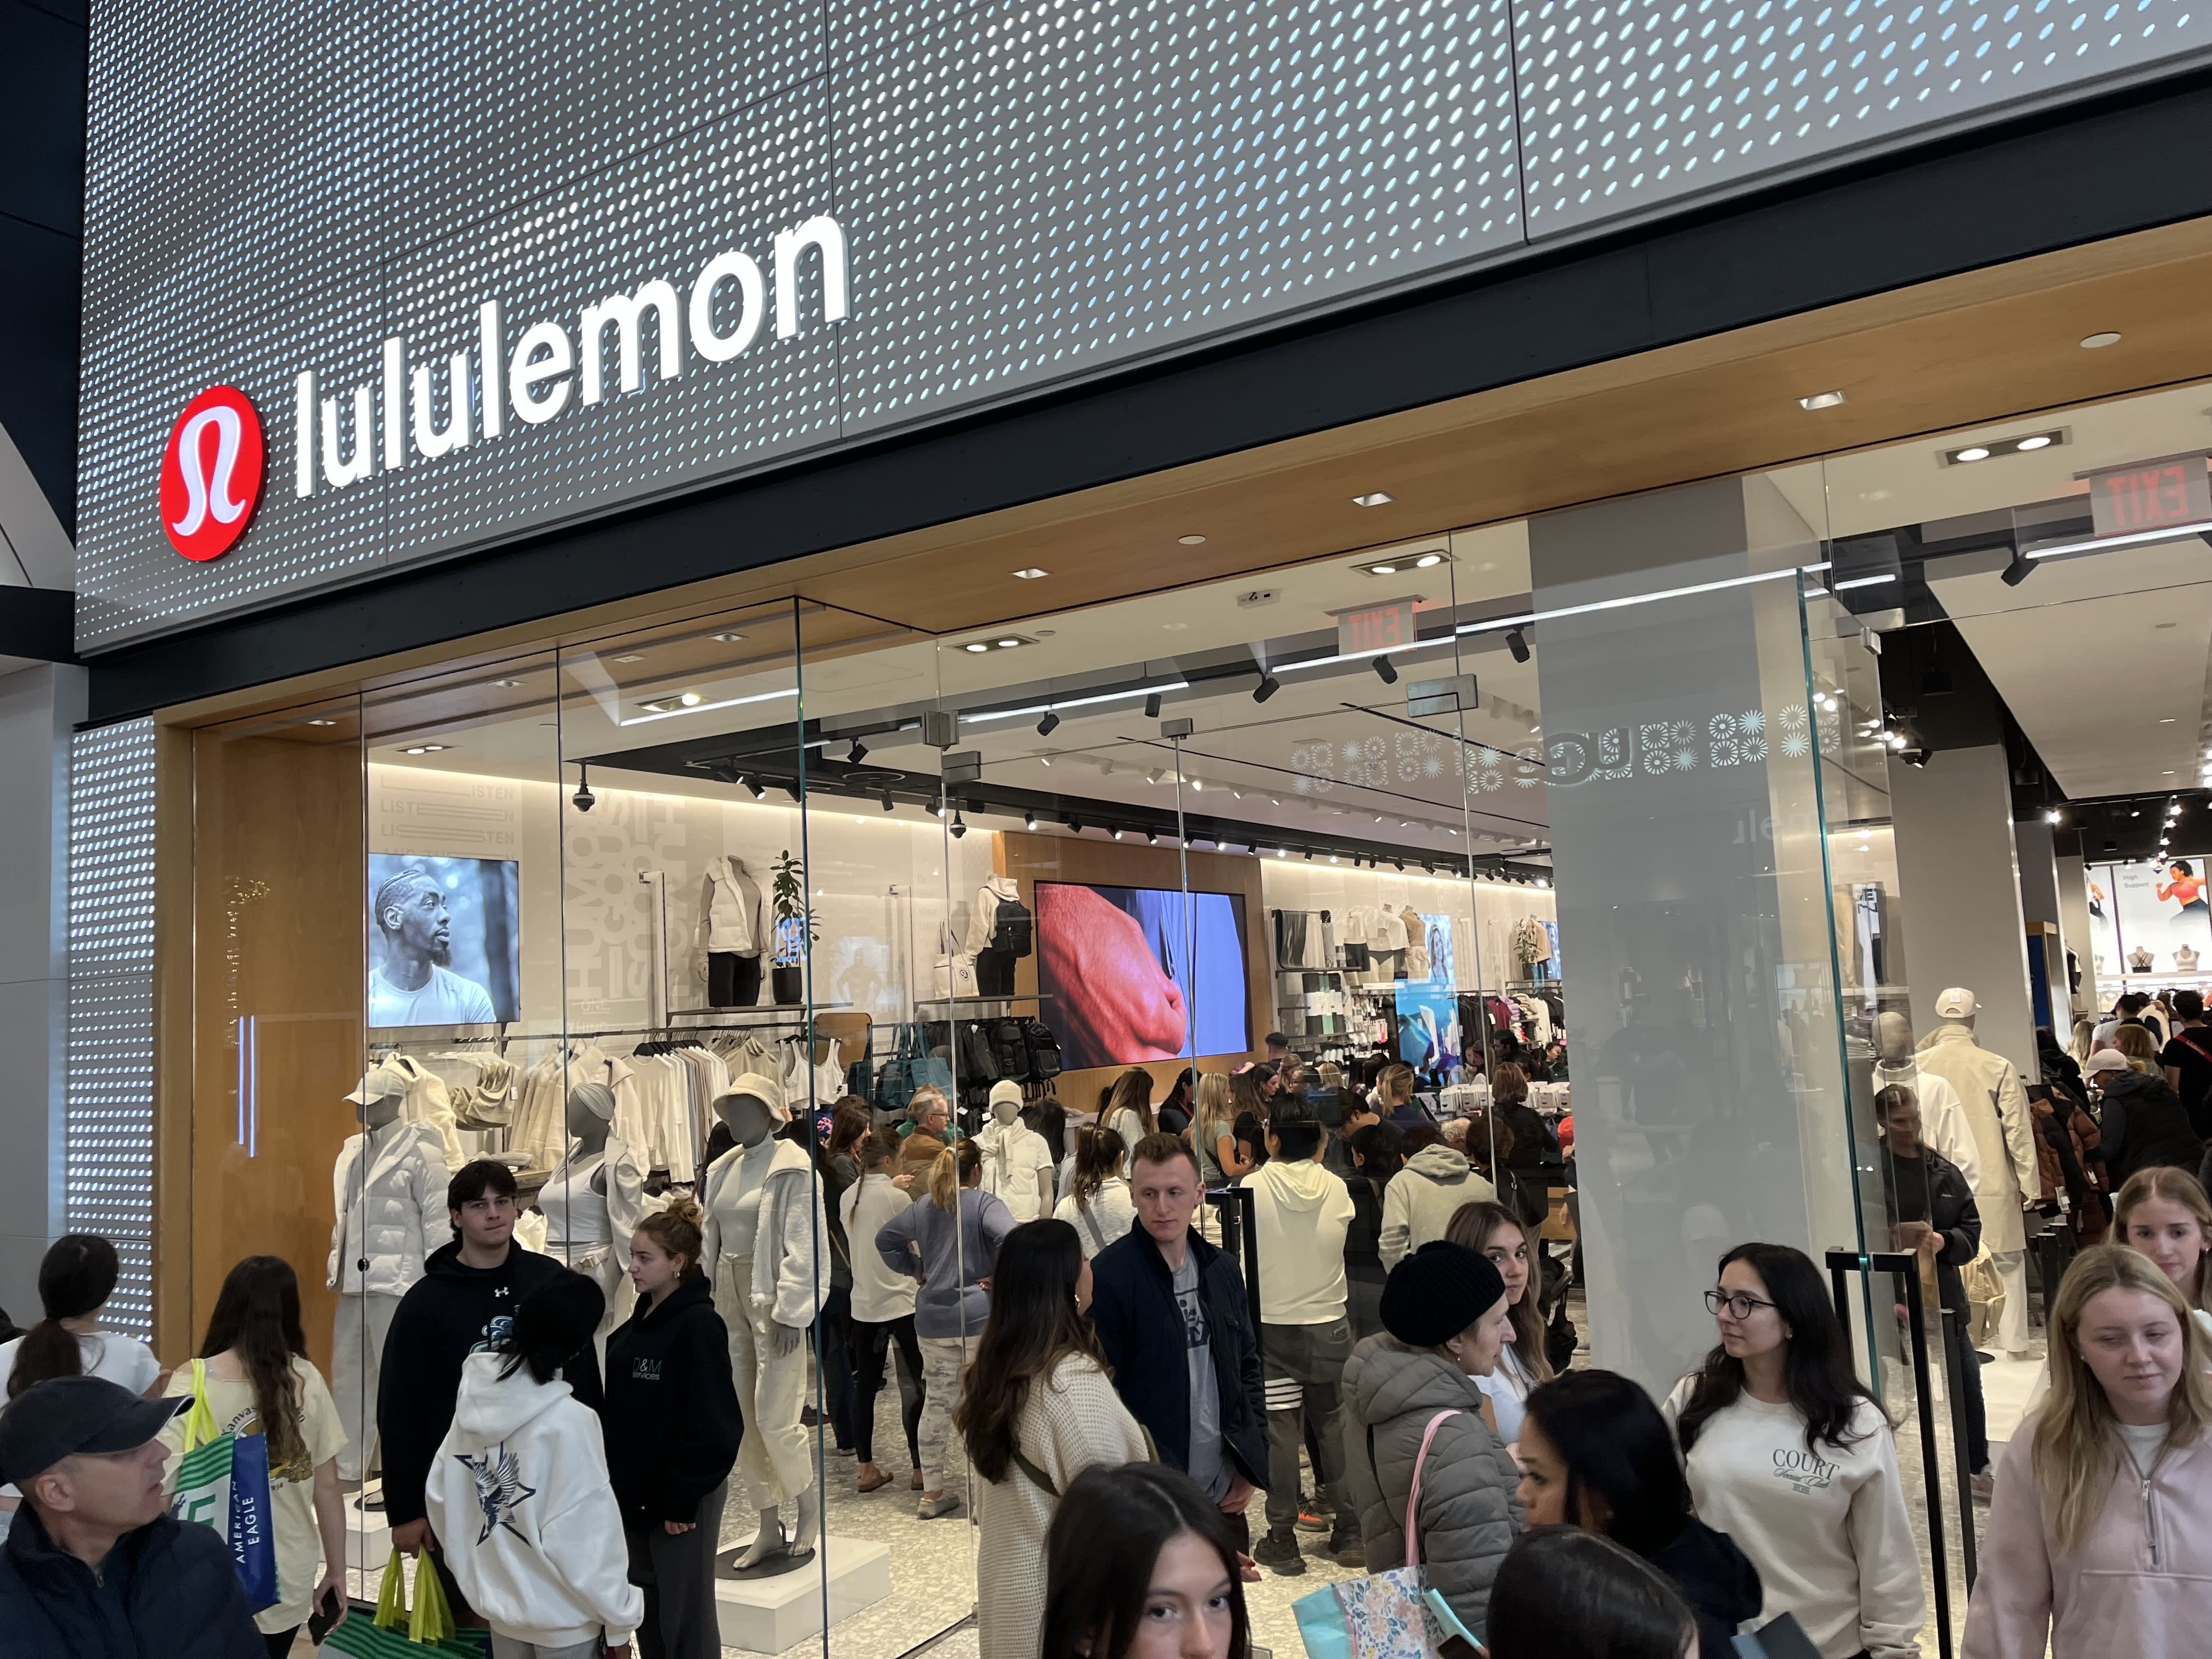 Lululemon posts Q3 revenue growth of 19 percent